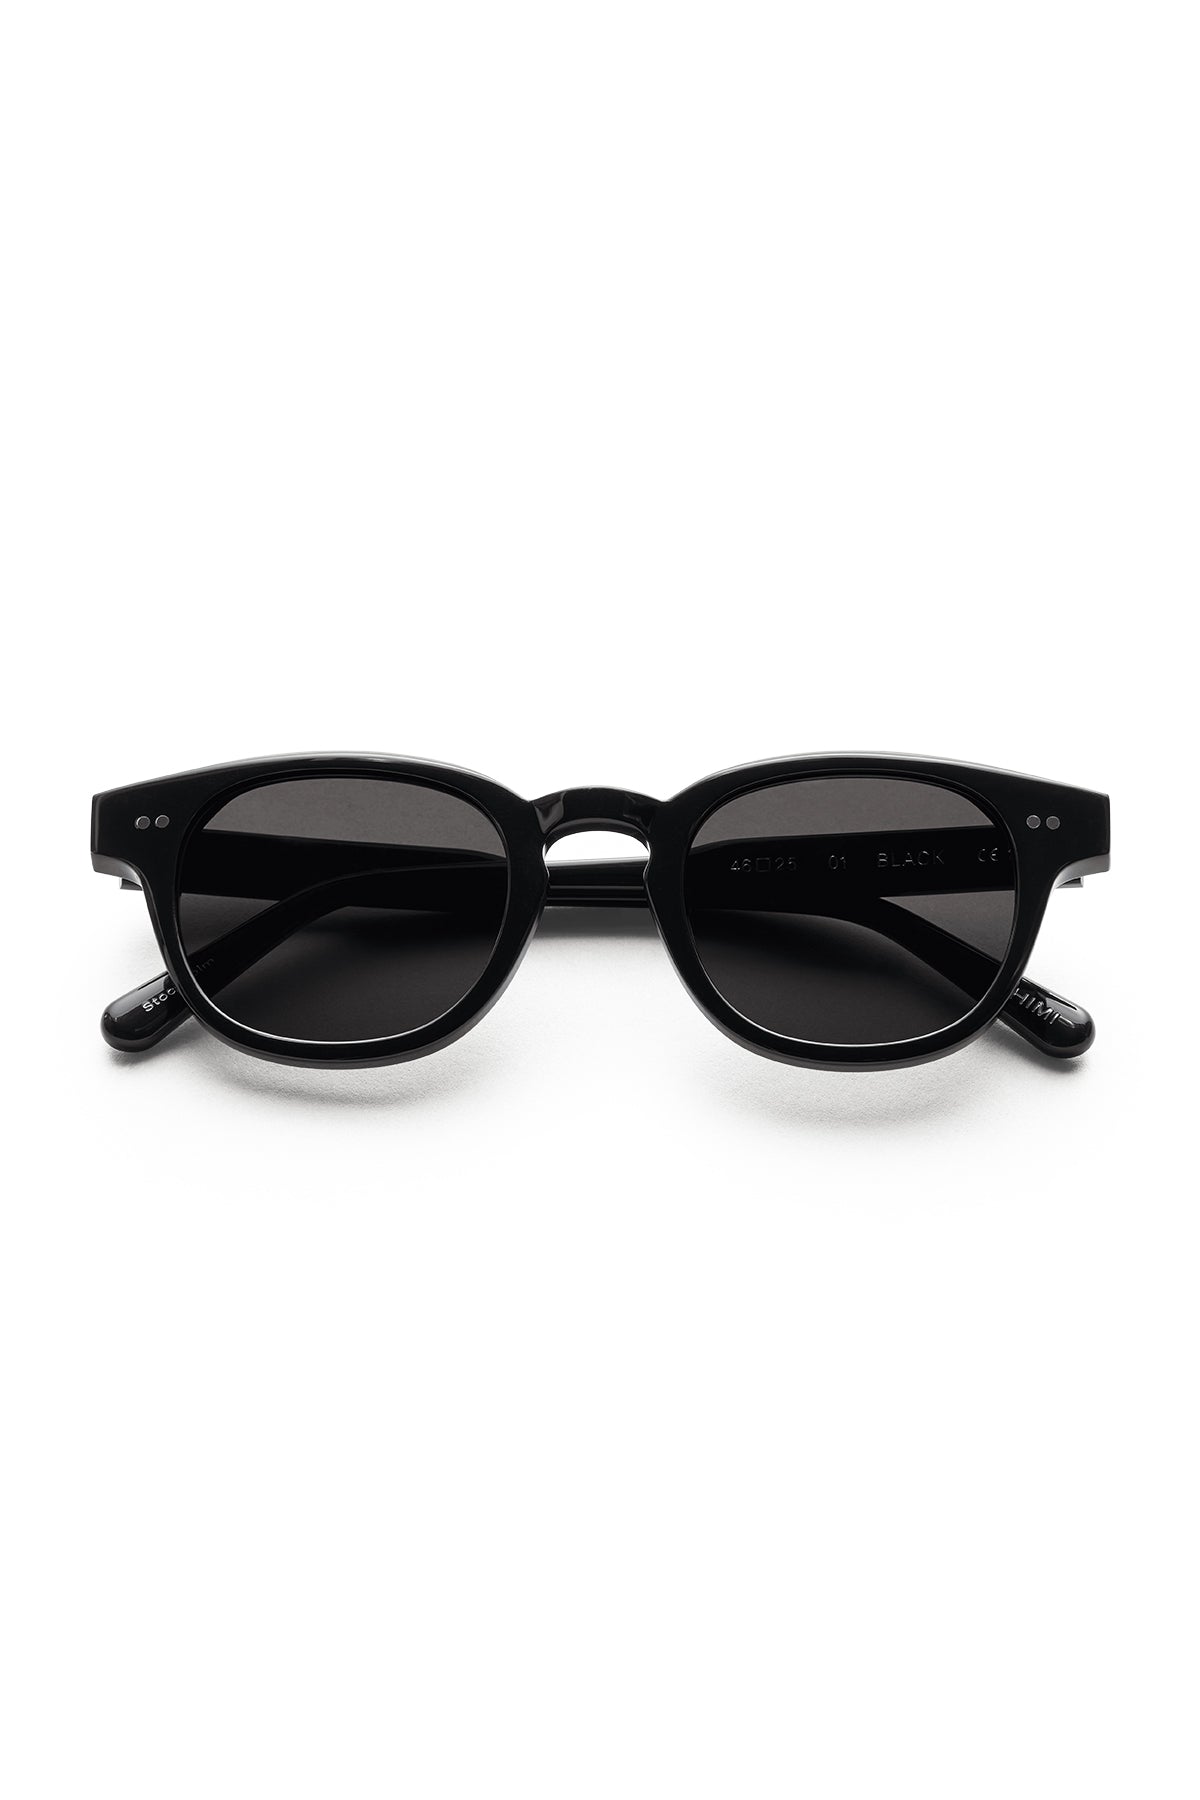   Chimi 01 Sunglasses Black Front 